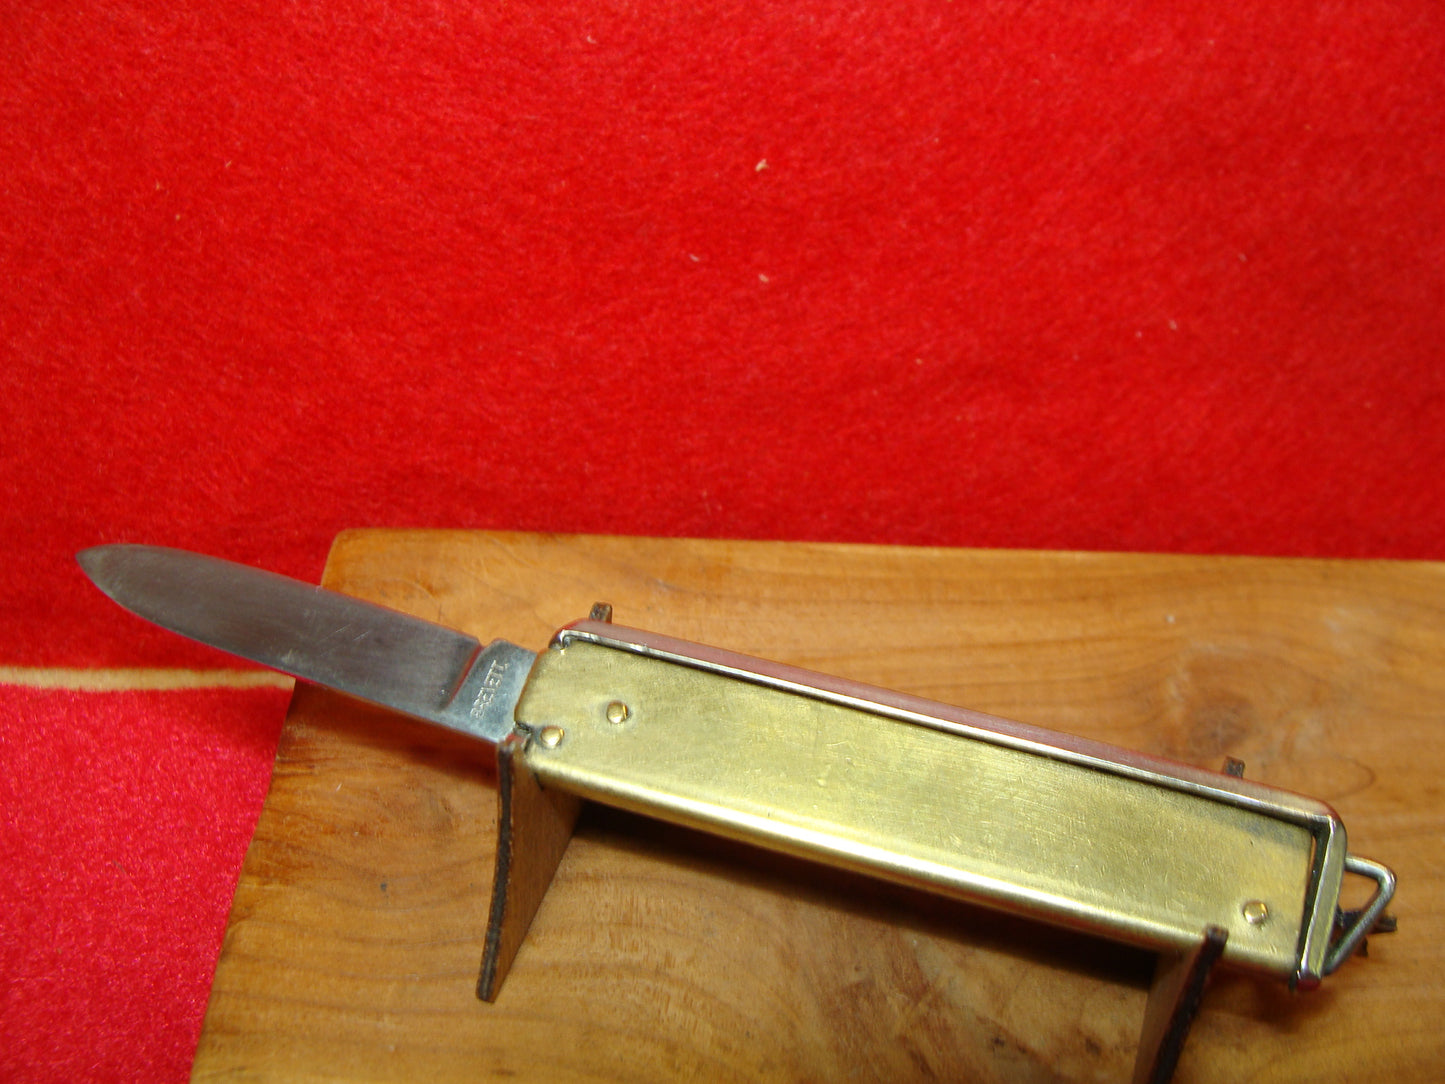 BREVETT ITALY STAINLESS NOVELTY BODY RELEASE ITALIAN AUTOMATIC KNIFE ALL METAL HANDLES